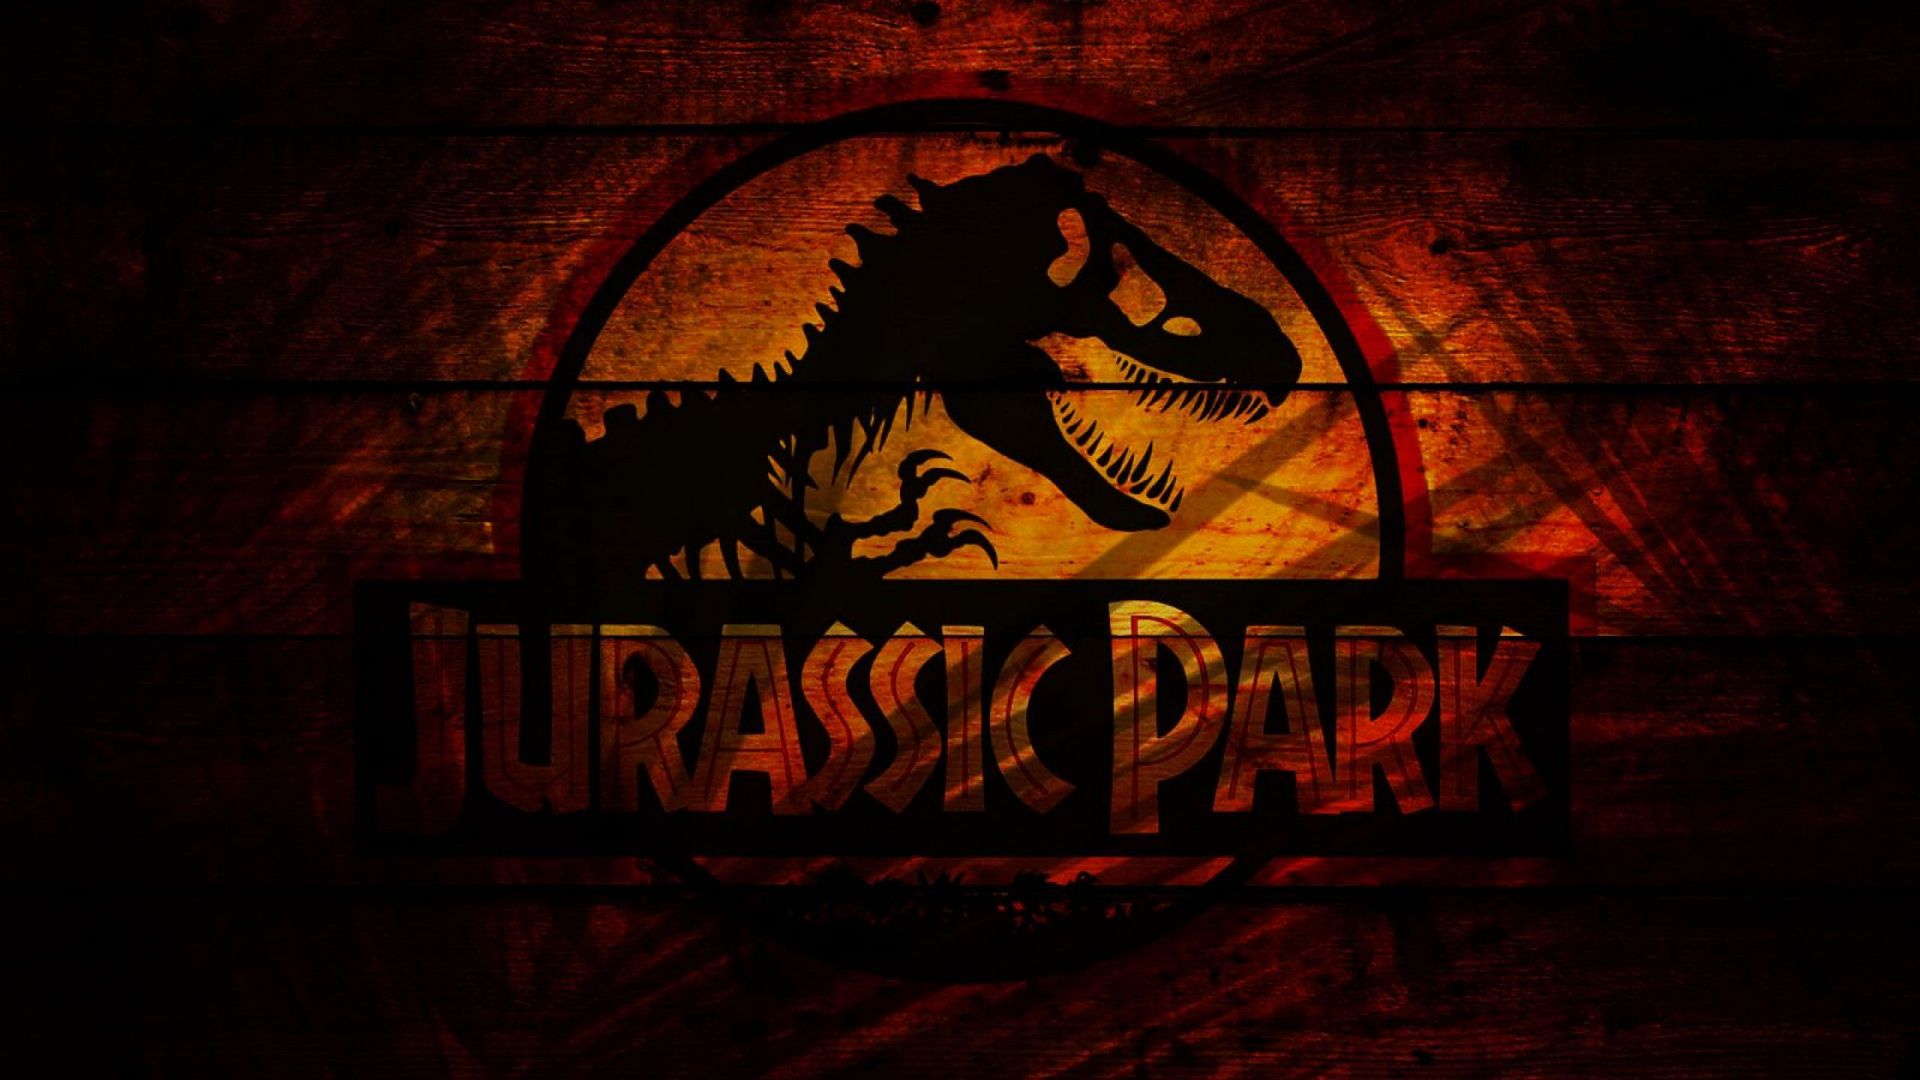 jurassic park screensaver free download